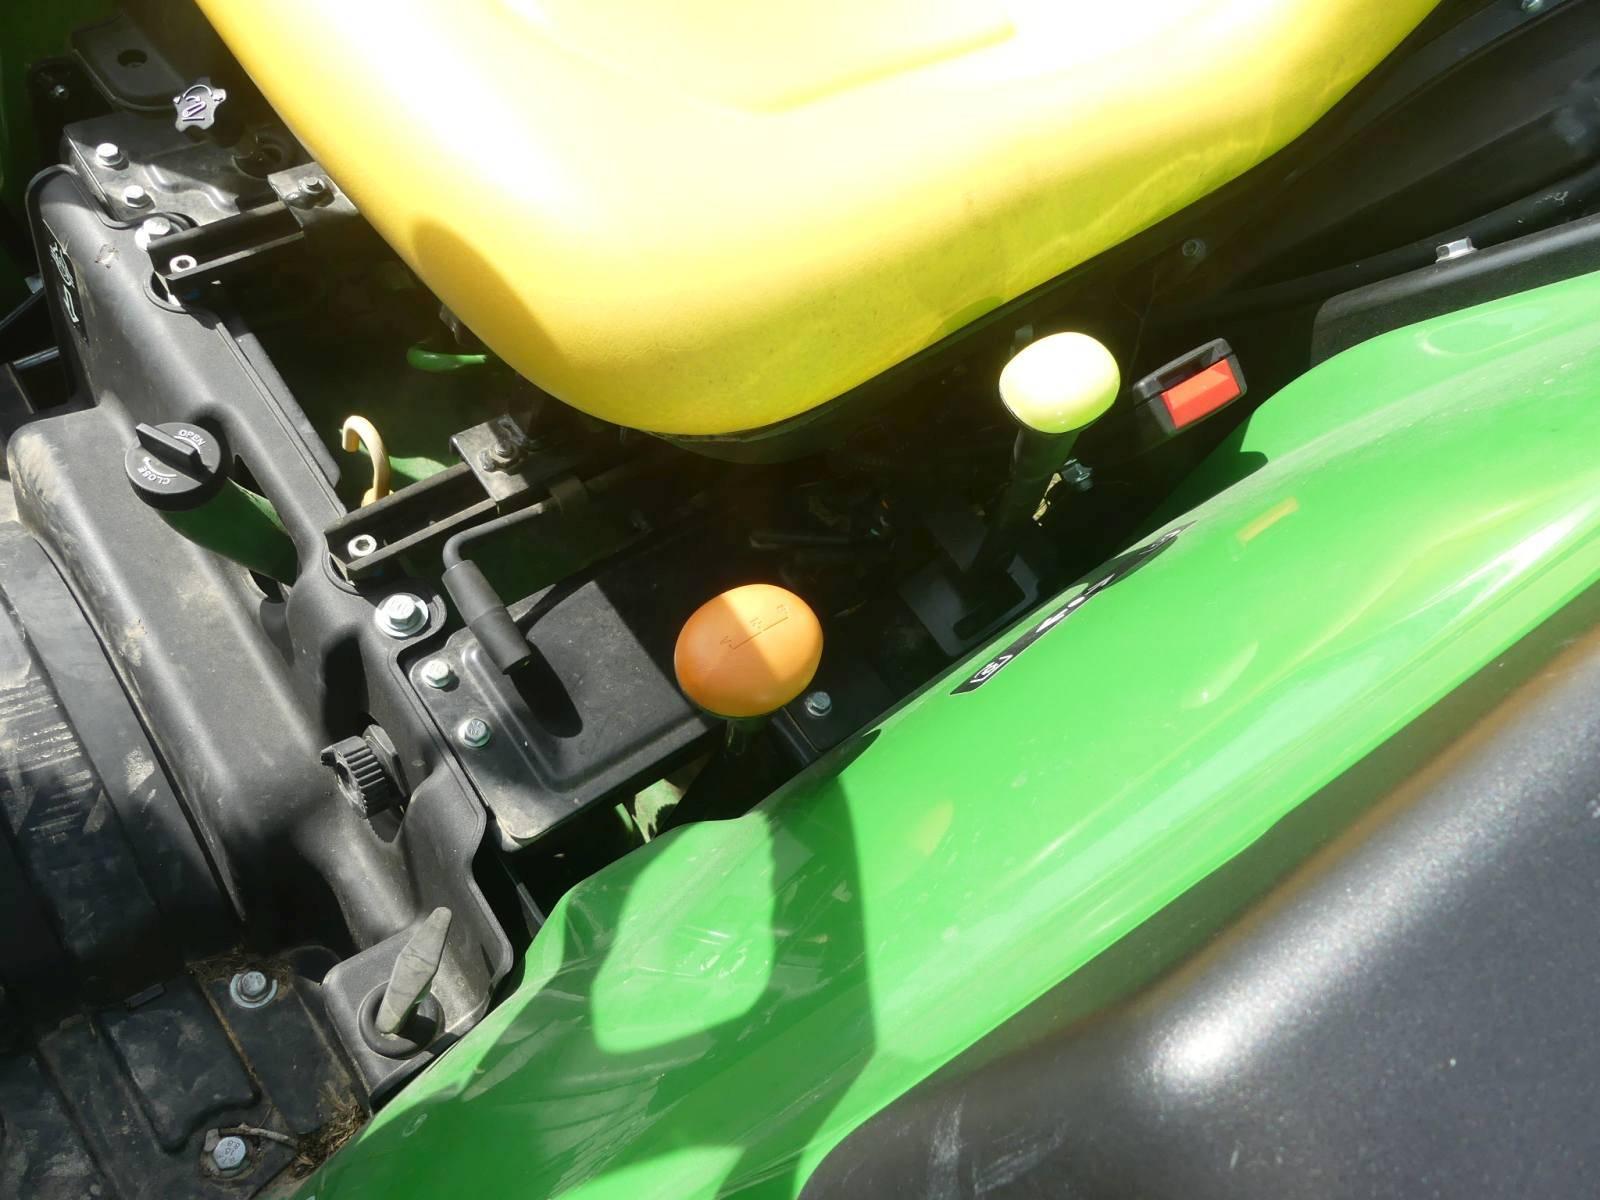 2022 John Deere 3043D MFWD Tractor, s/n 1PY3043DKMB002187: Remaining Factor